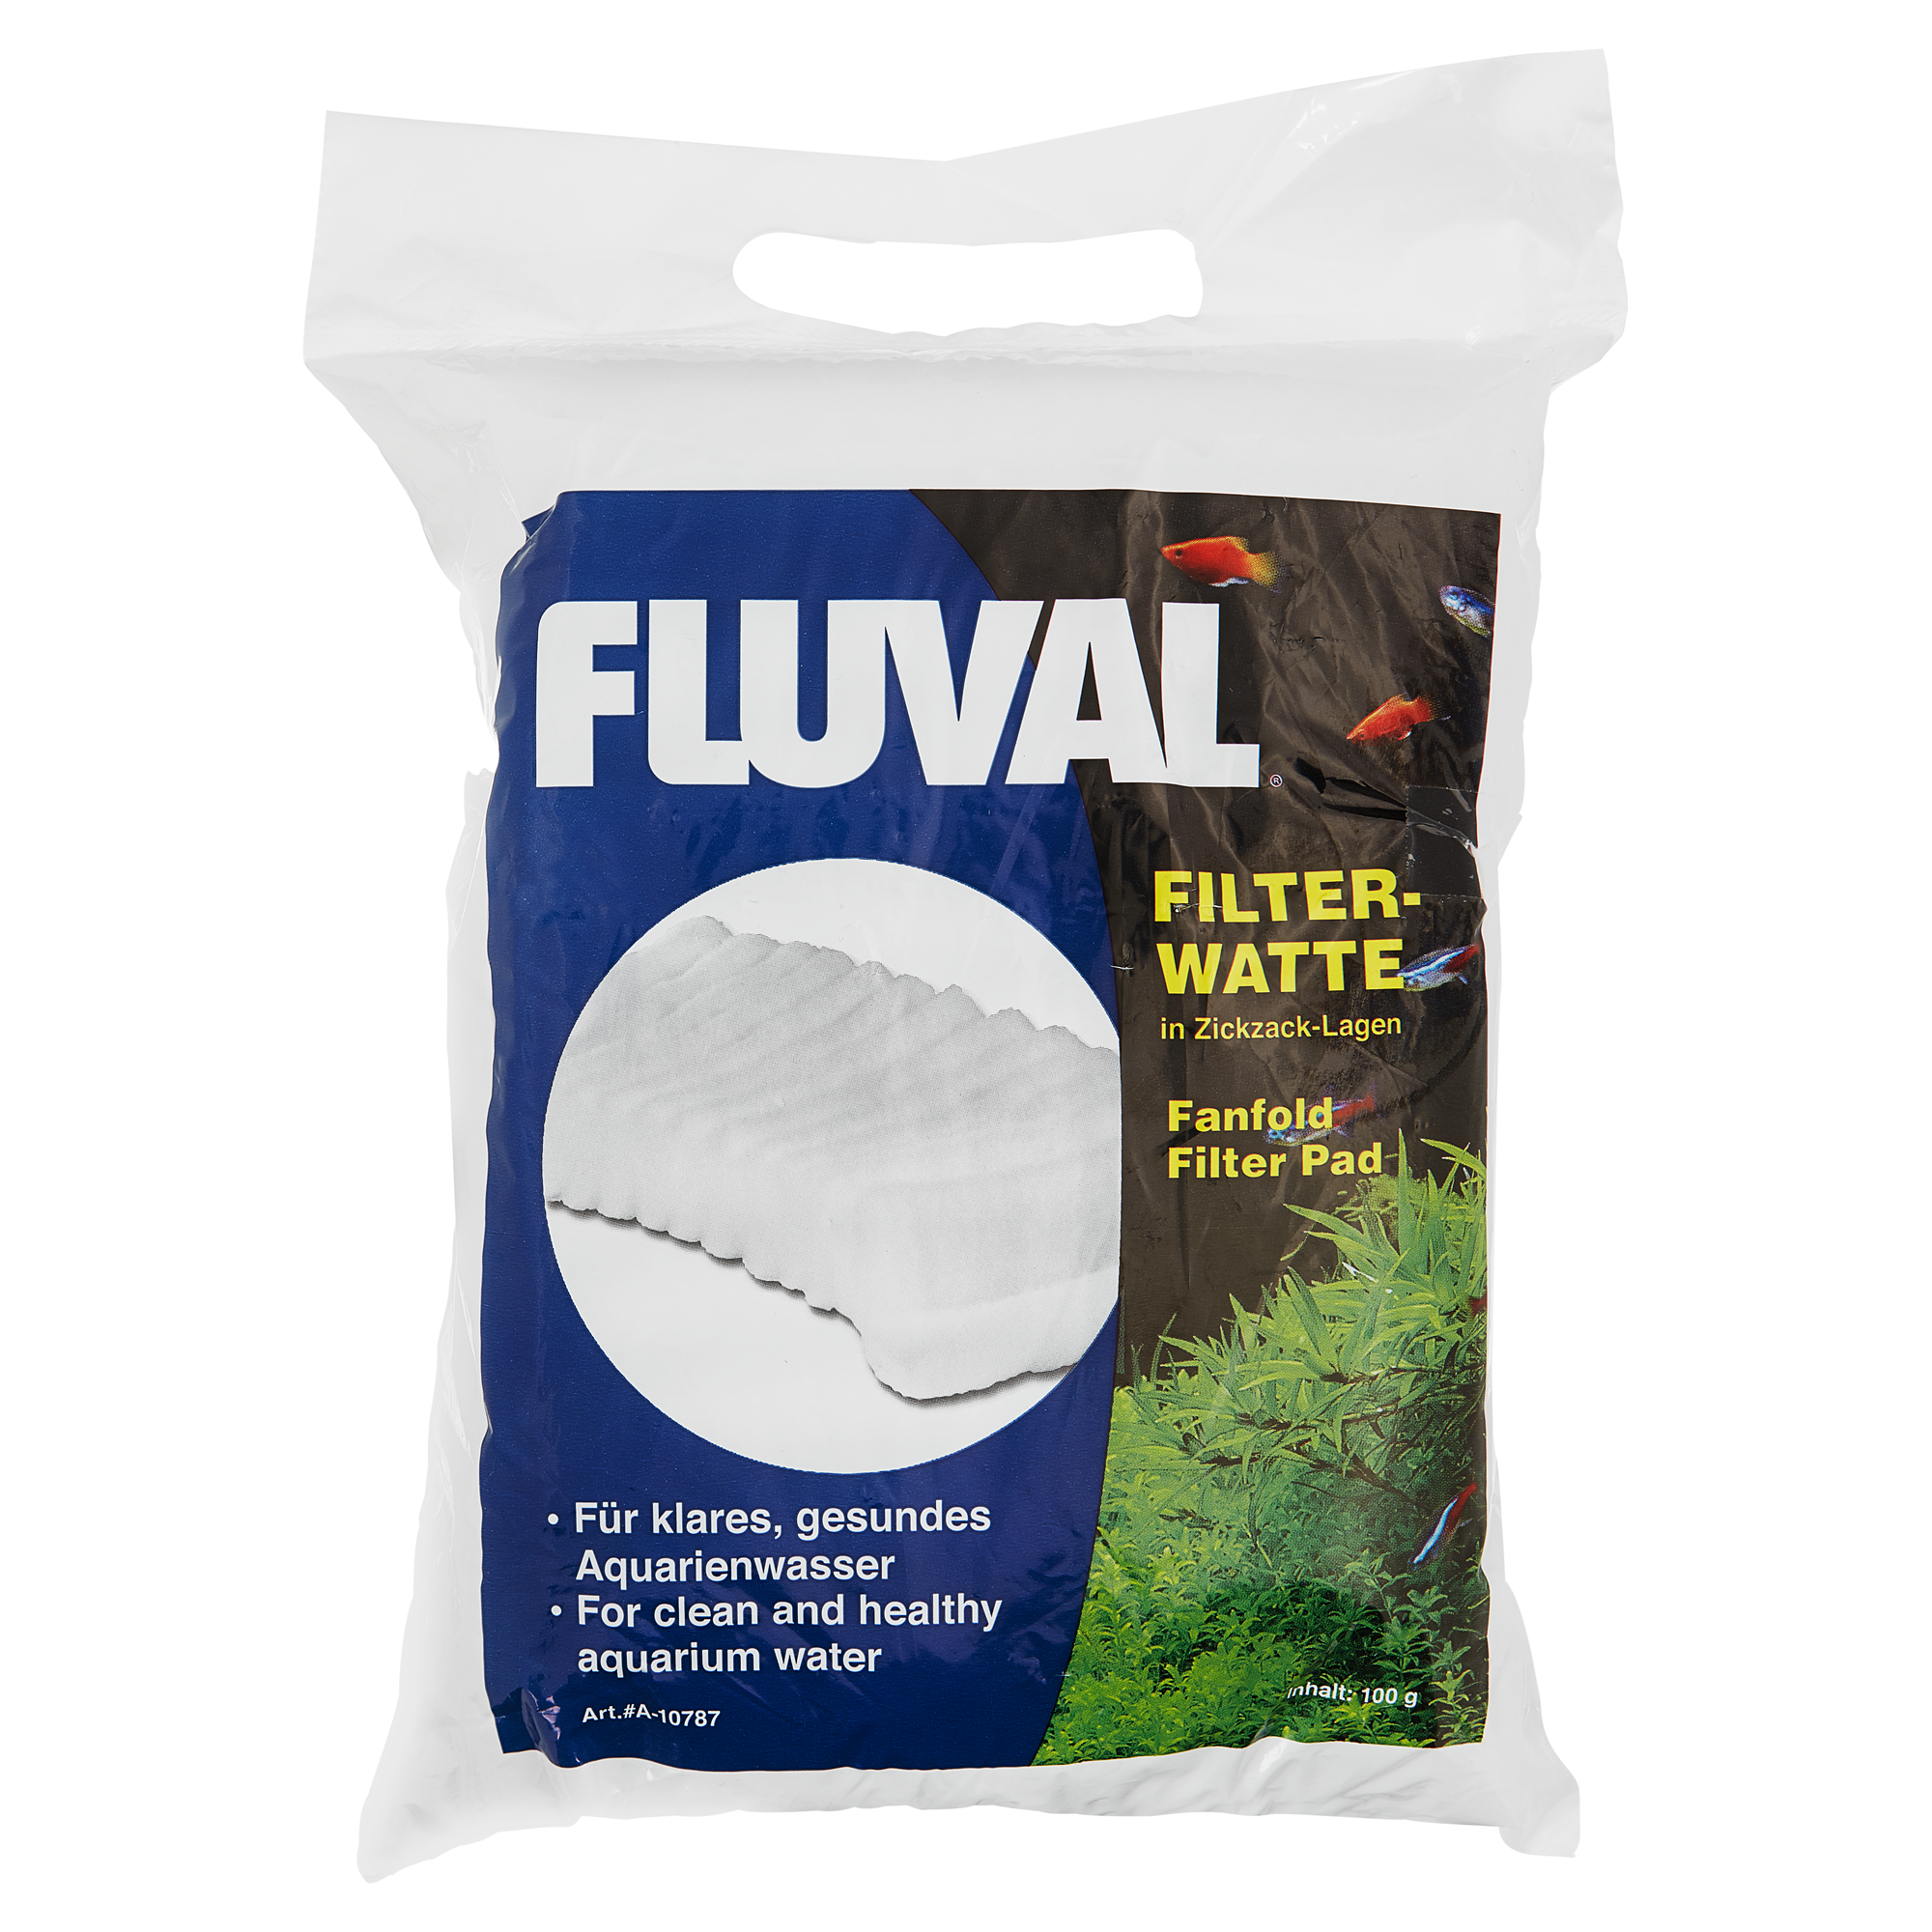 Filterwatte Polybeutel weiß 100 g + product picture